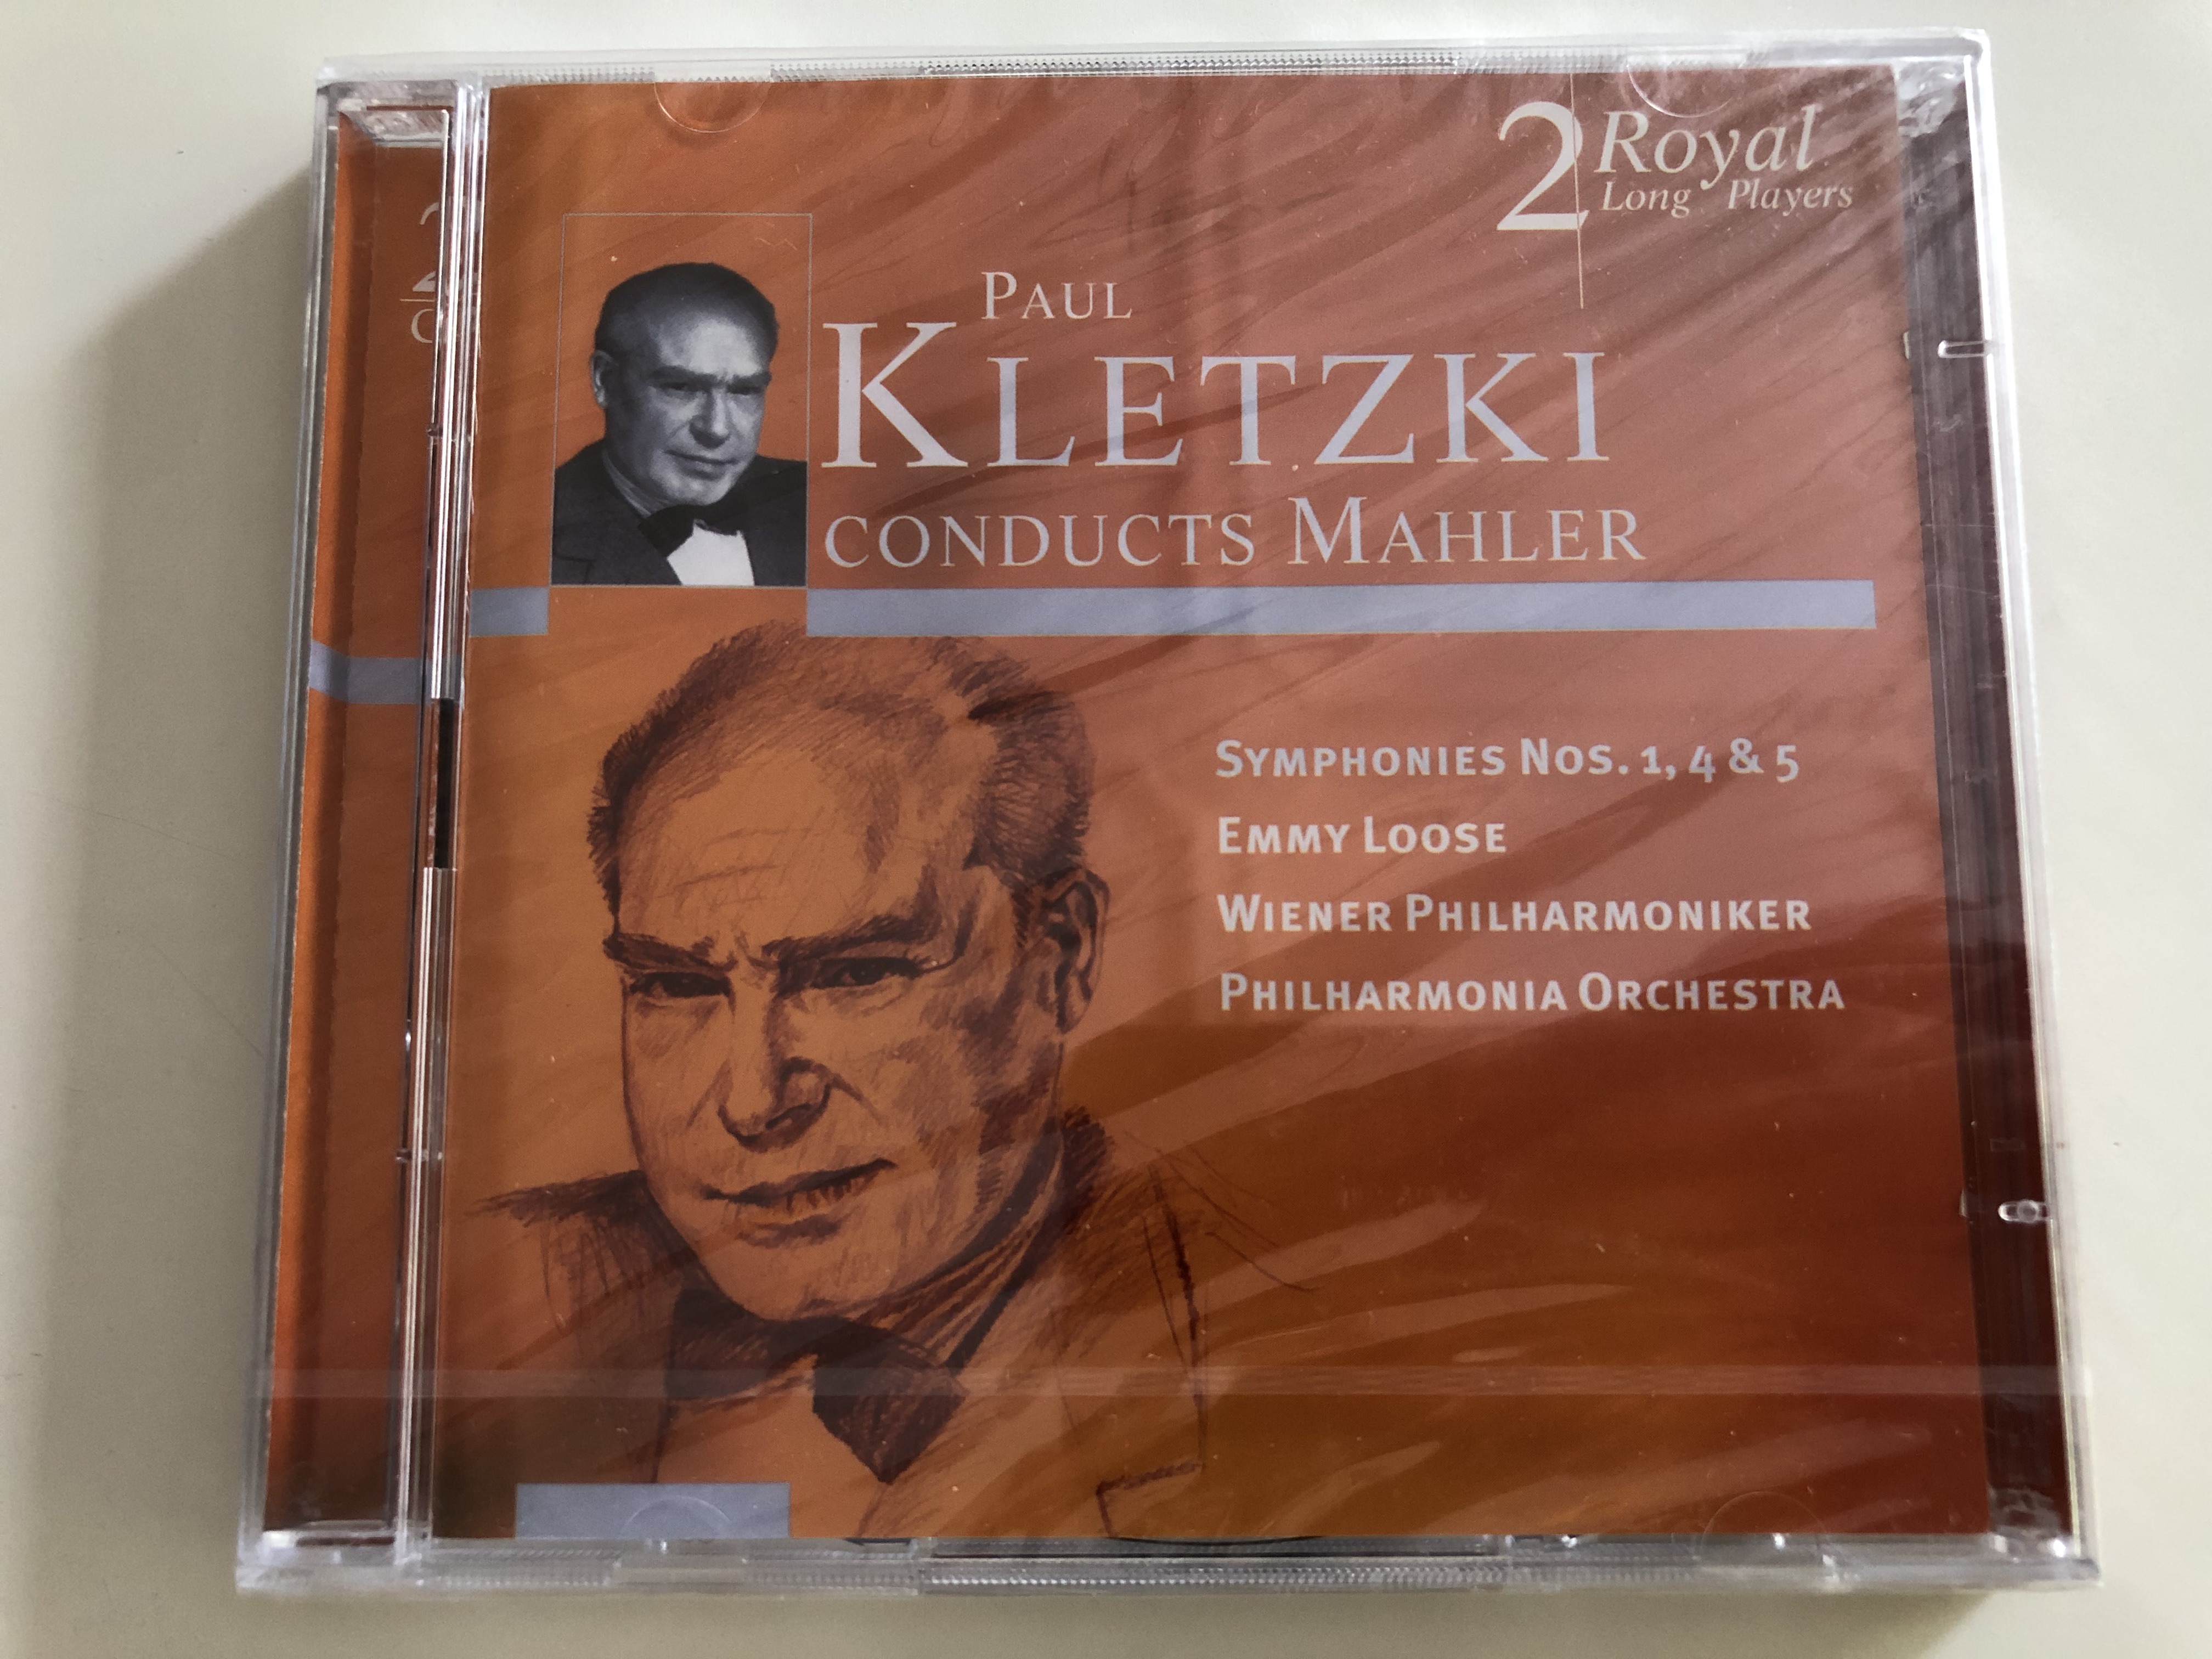 paul-kletzki-conducts-mahler-symphonies-no.-1-4-5-emmy-loose-wiener-philharmoniker-philharmonia-orchestra-2-royal-long-players-audio-cd-2000-disky-dcl-706722-1-.jpg